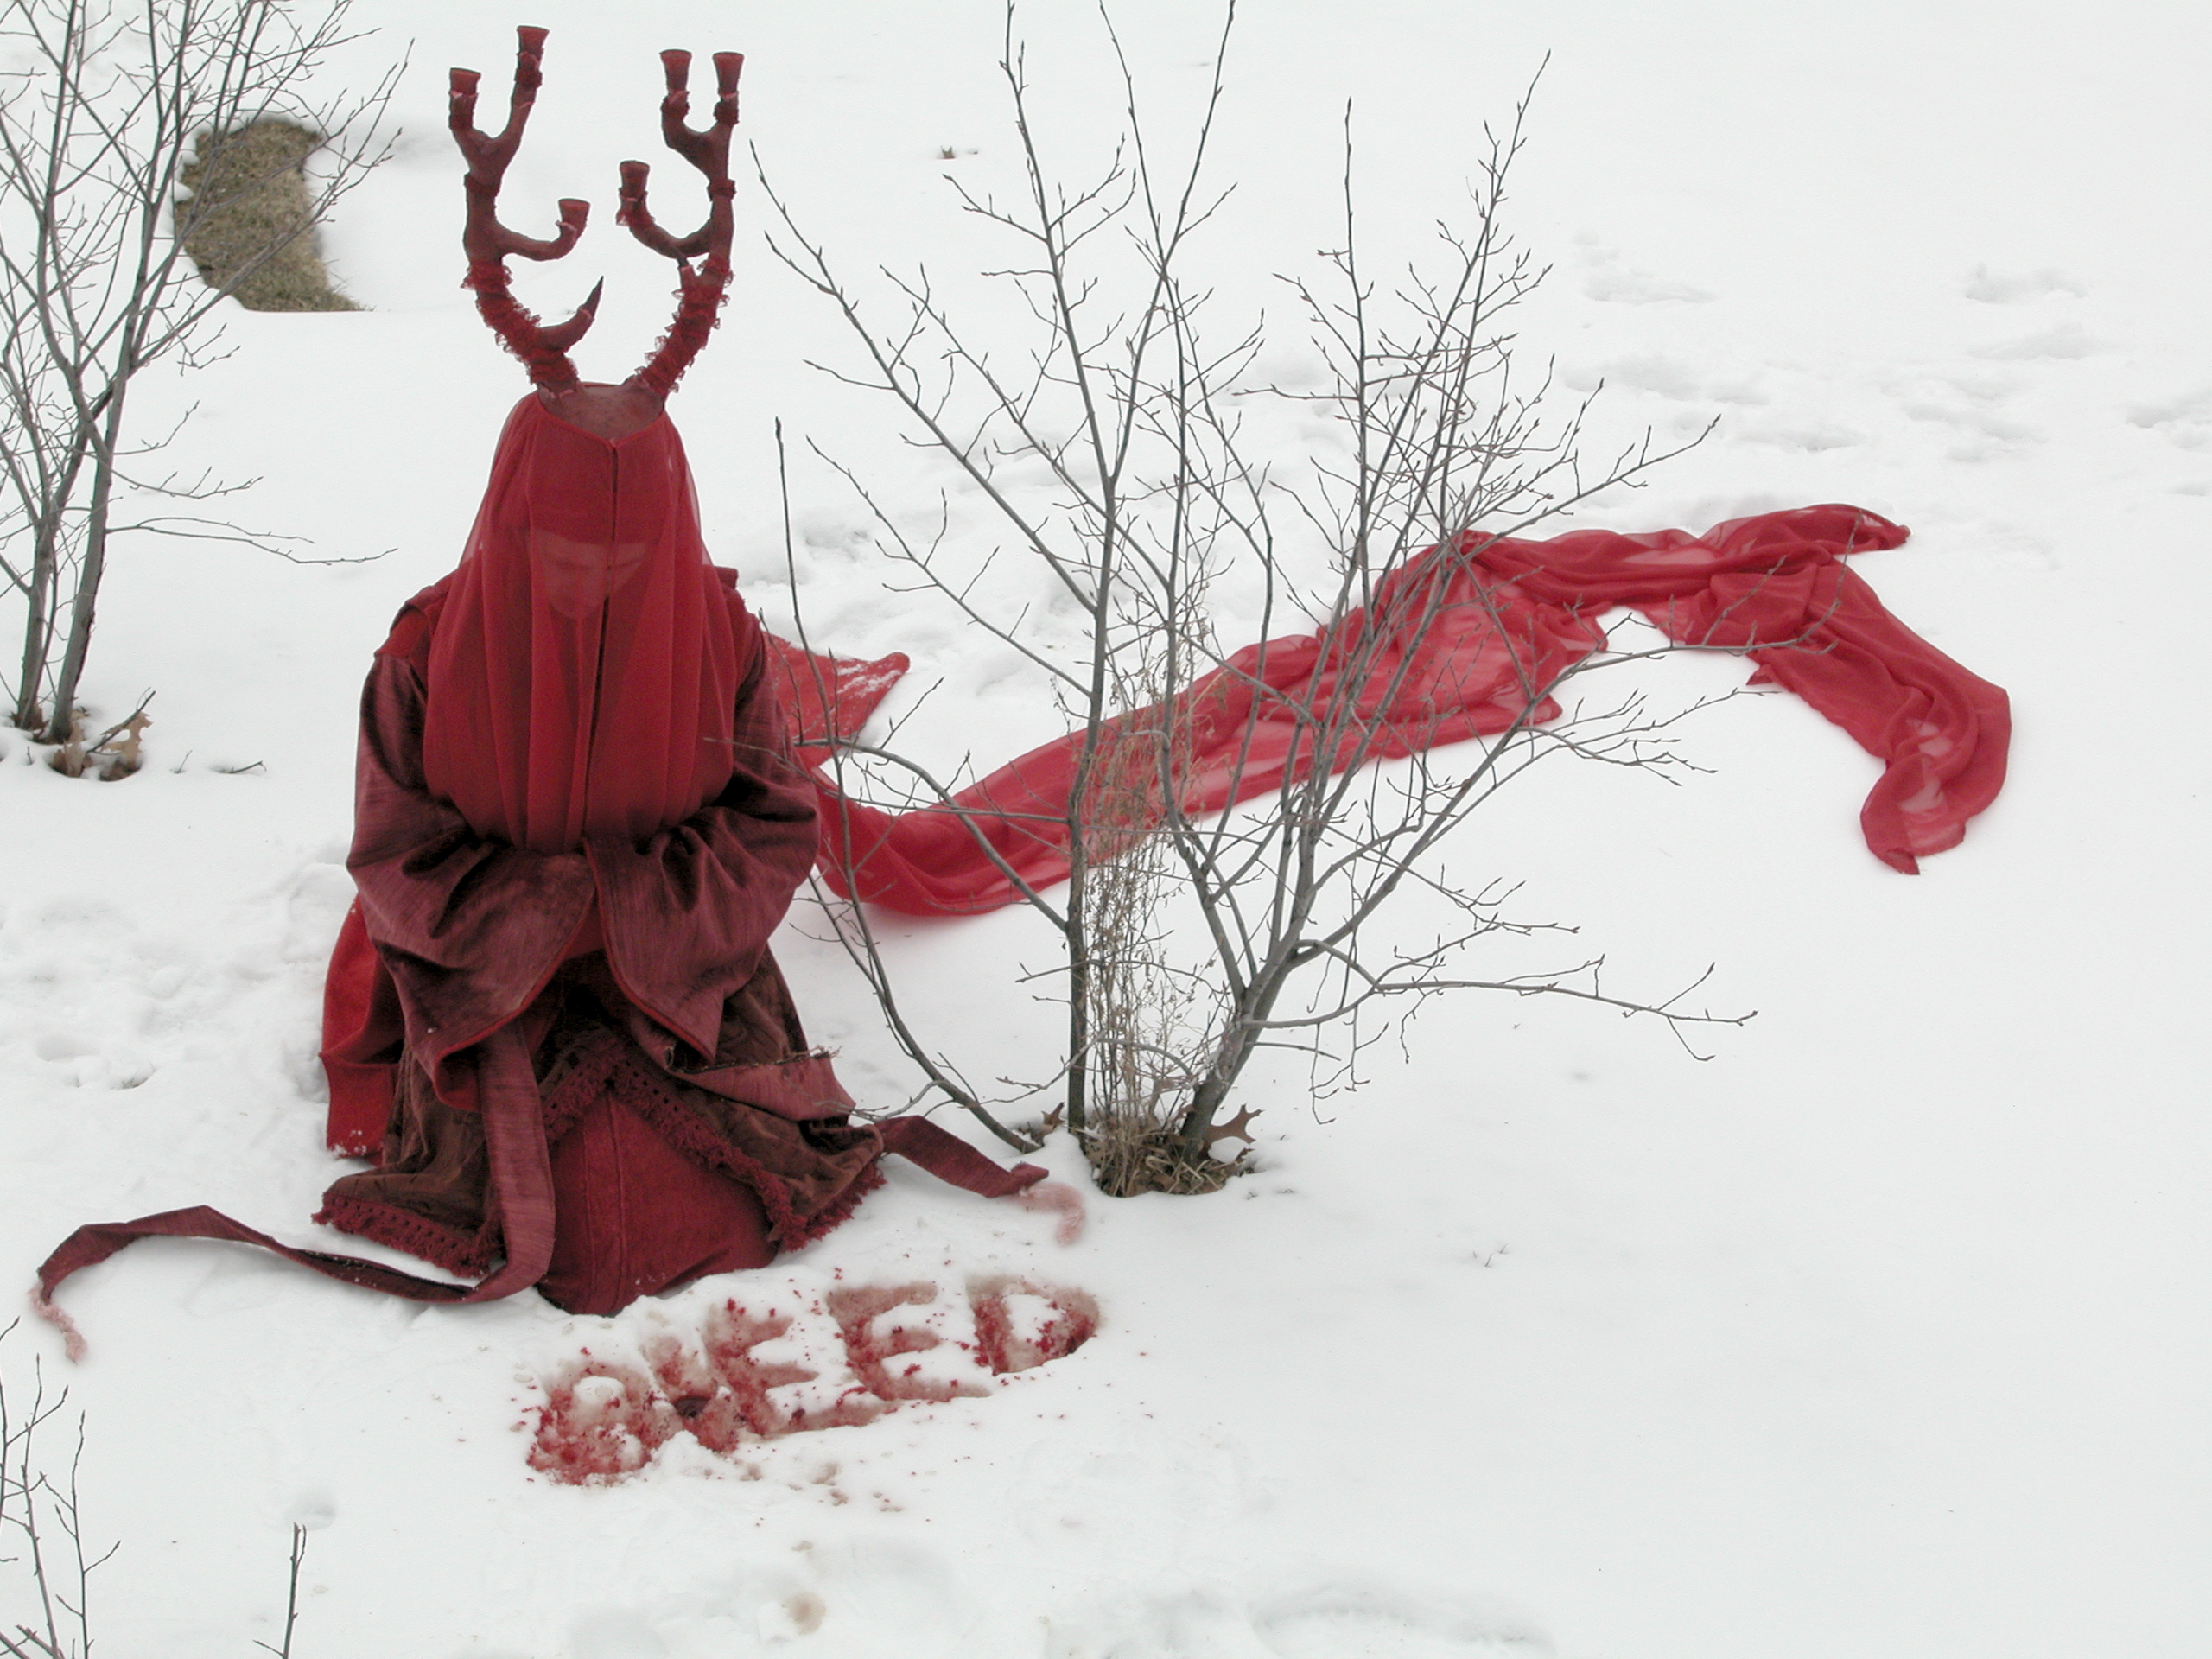 Vigil Deer action, blood writing in snow.  Albany NY, February 2005. (photo: Rebecca Rentz).